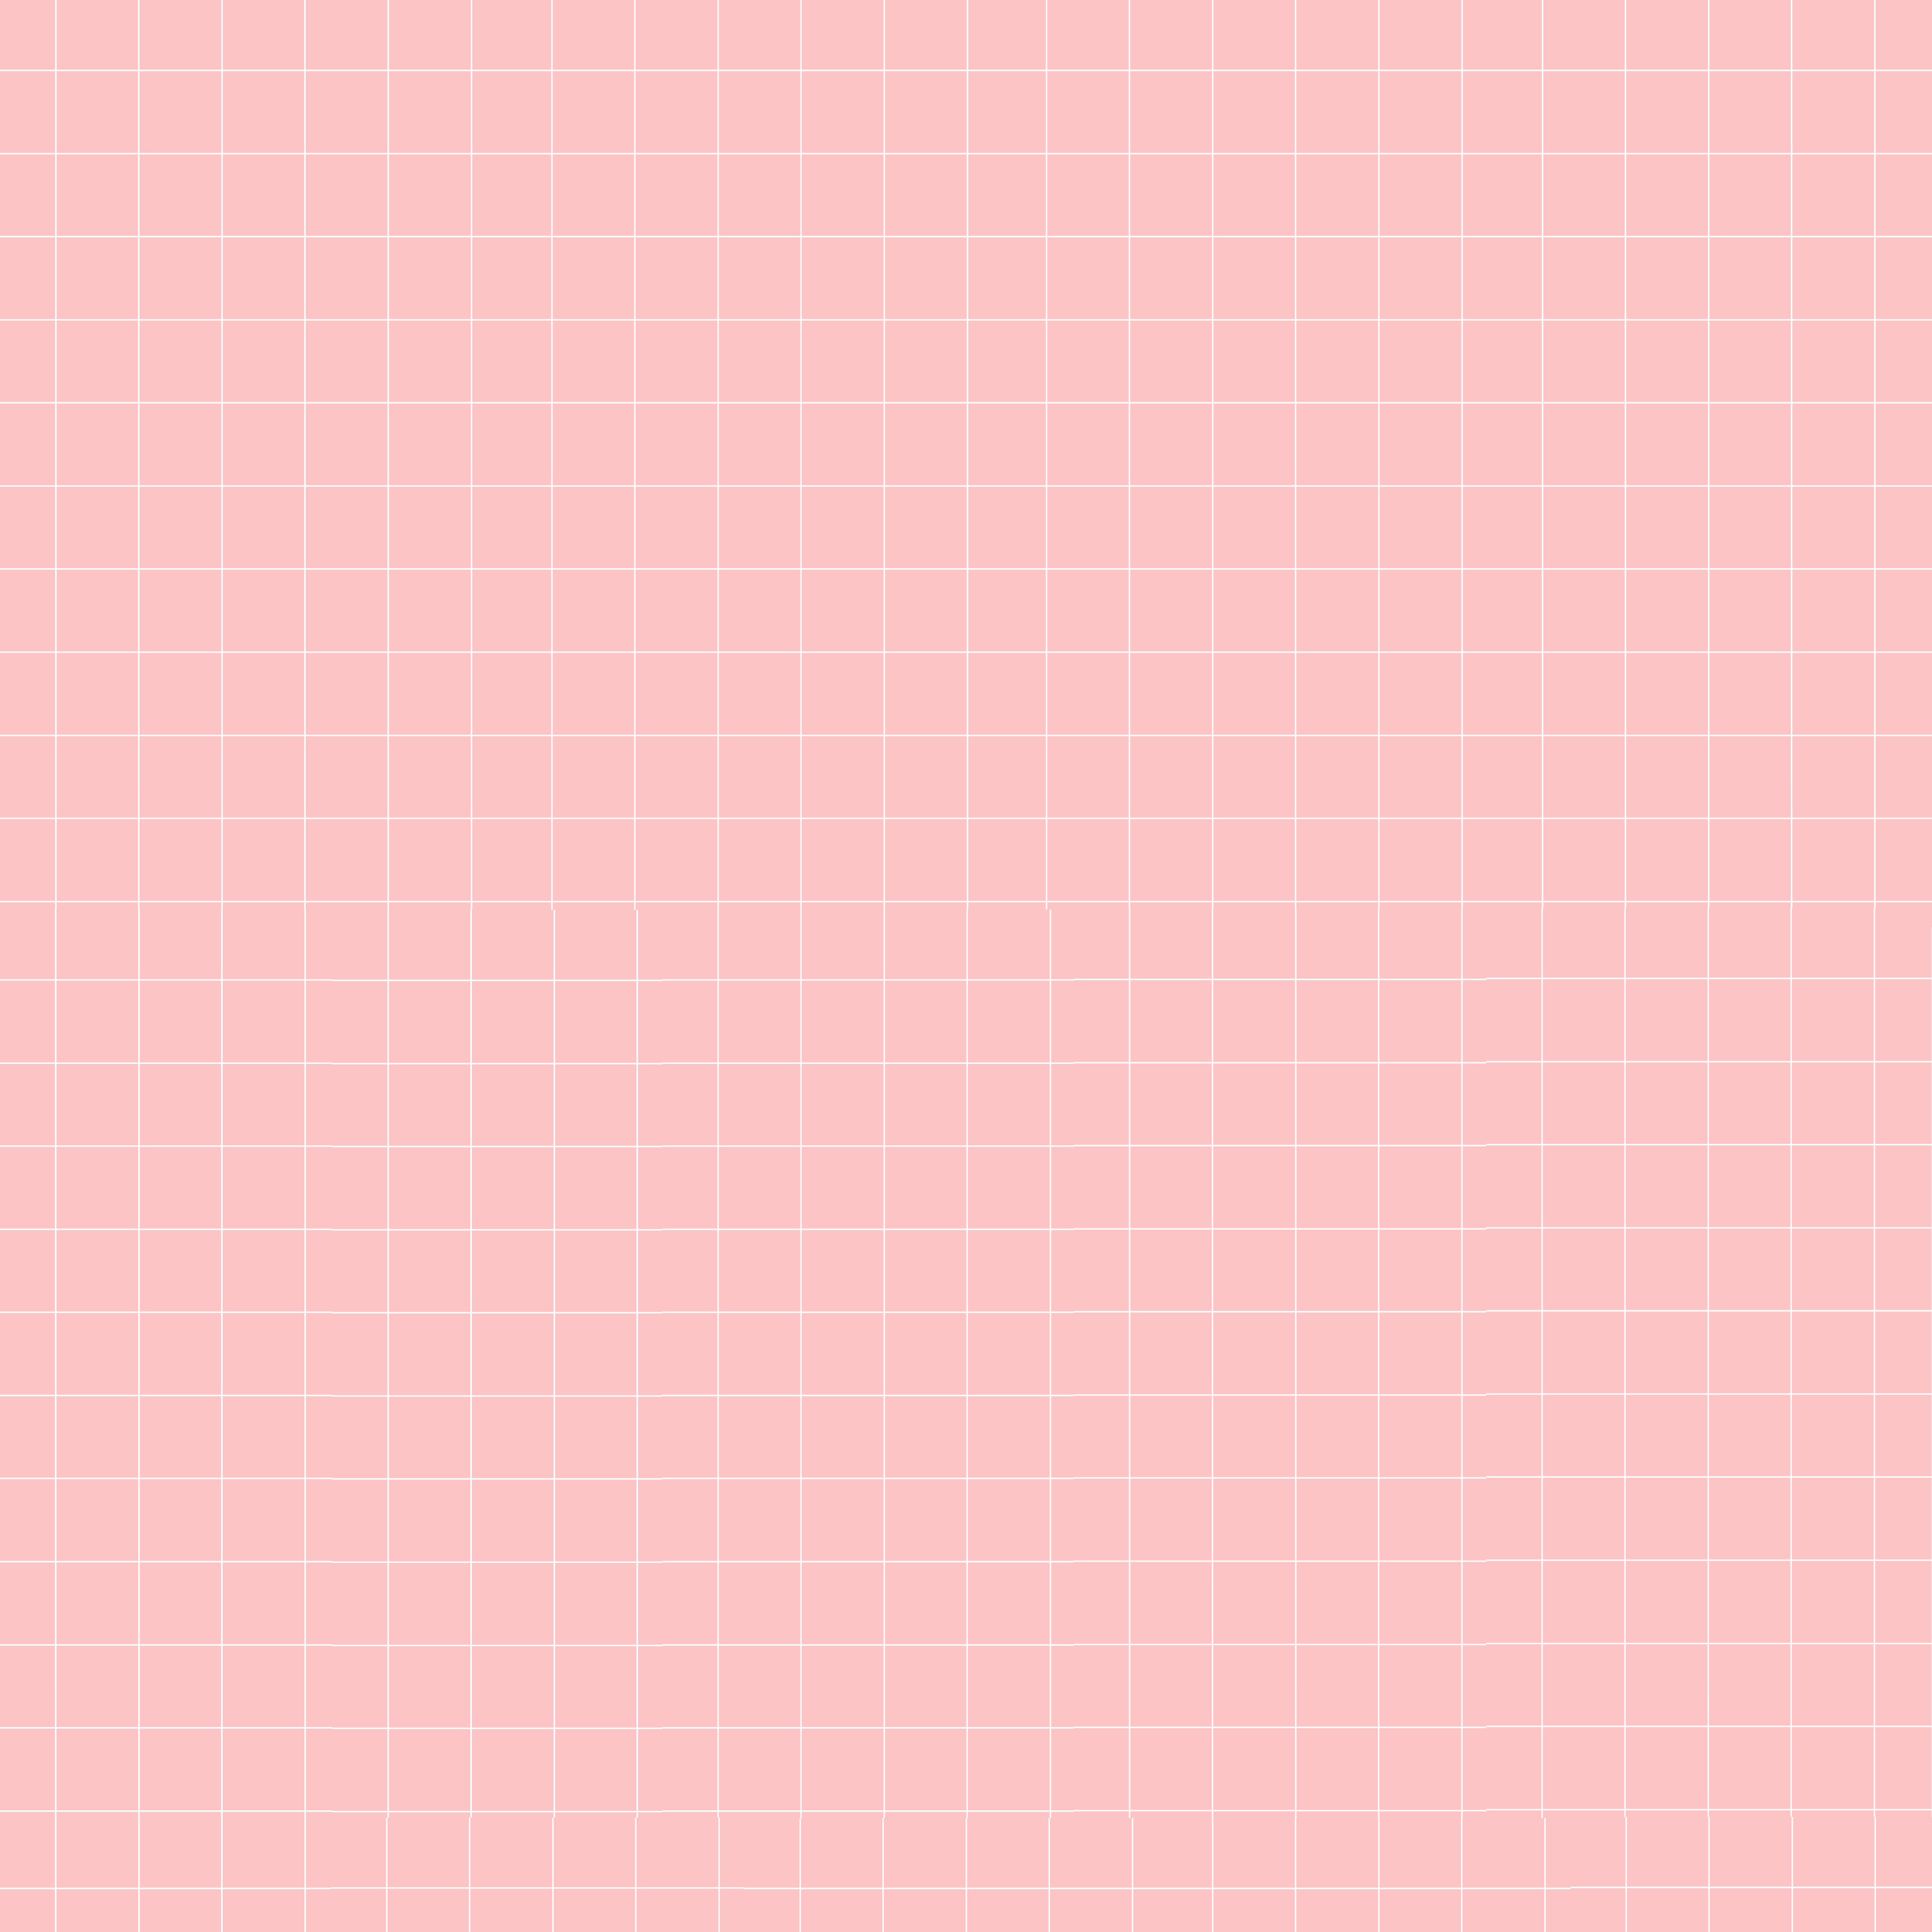 WALLPAPERS. Pastel pink wallpaper, Pink wallpaper, Grid wallpaper